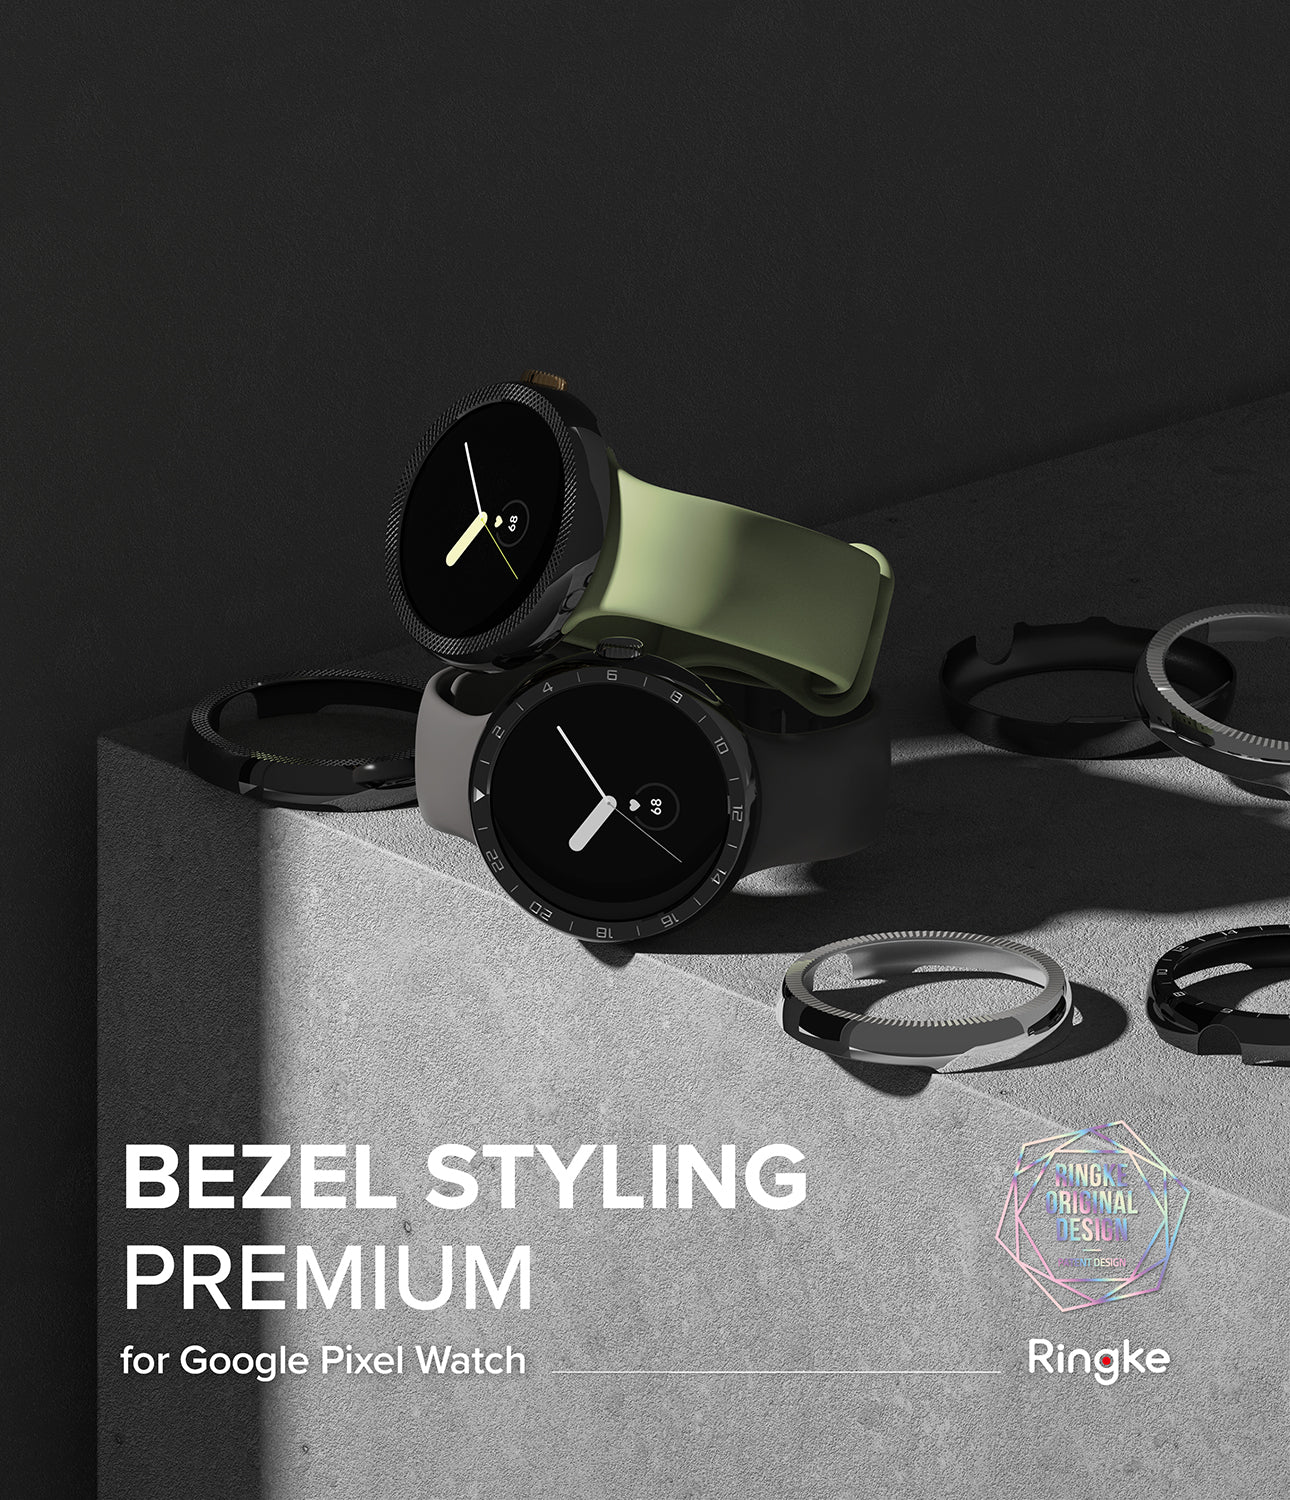 Bezel Styling Premium for Google Pixel Watch.